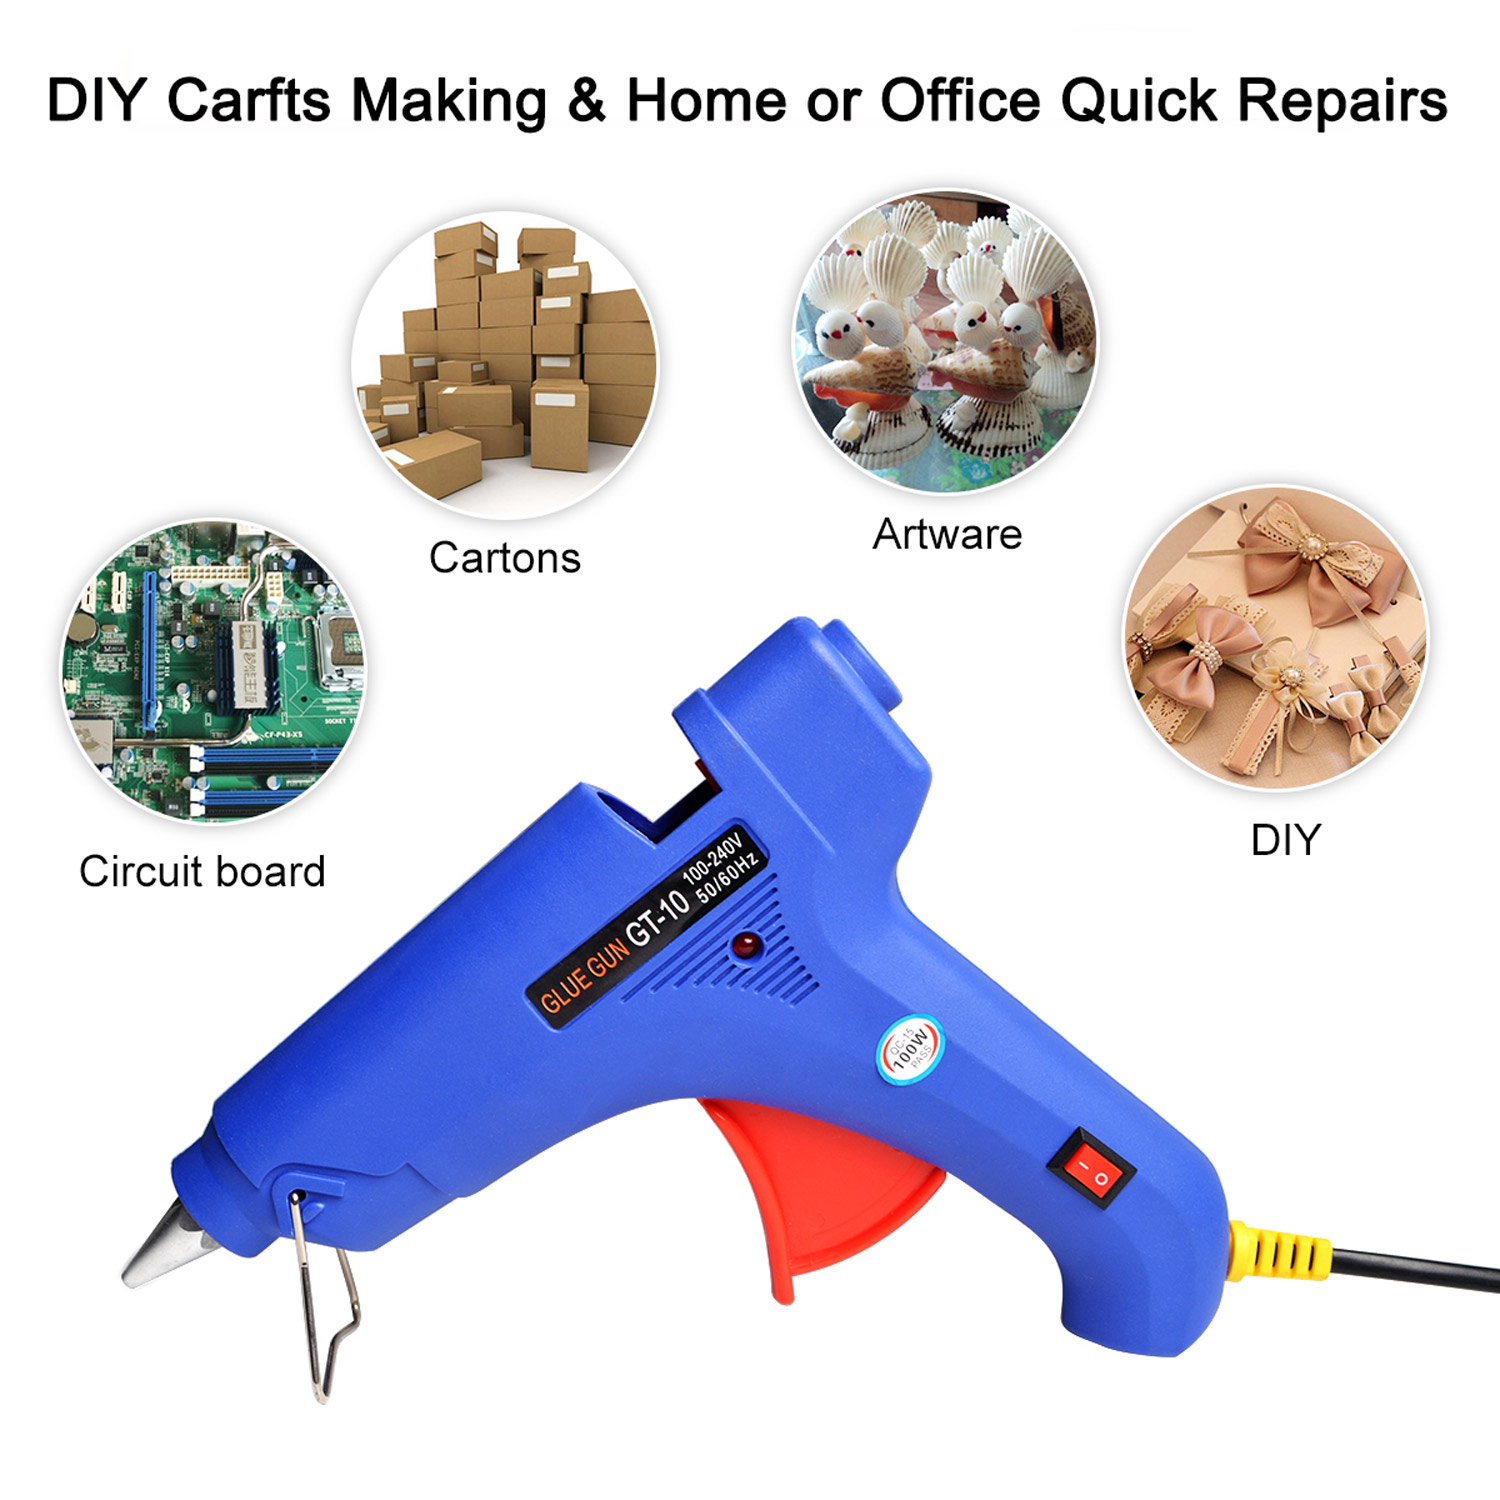 Super PDR car body repair tool kit pops Slide Hammer puller herramienta Auto Dent Remove